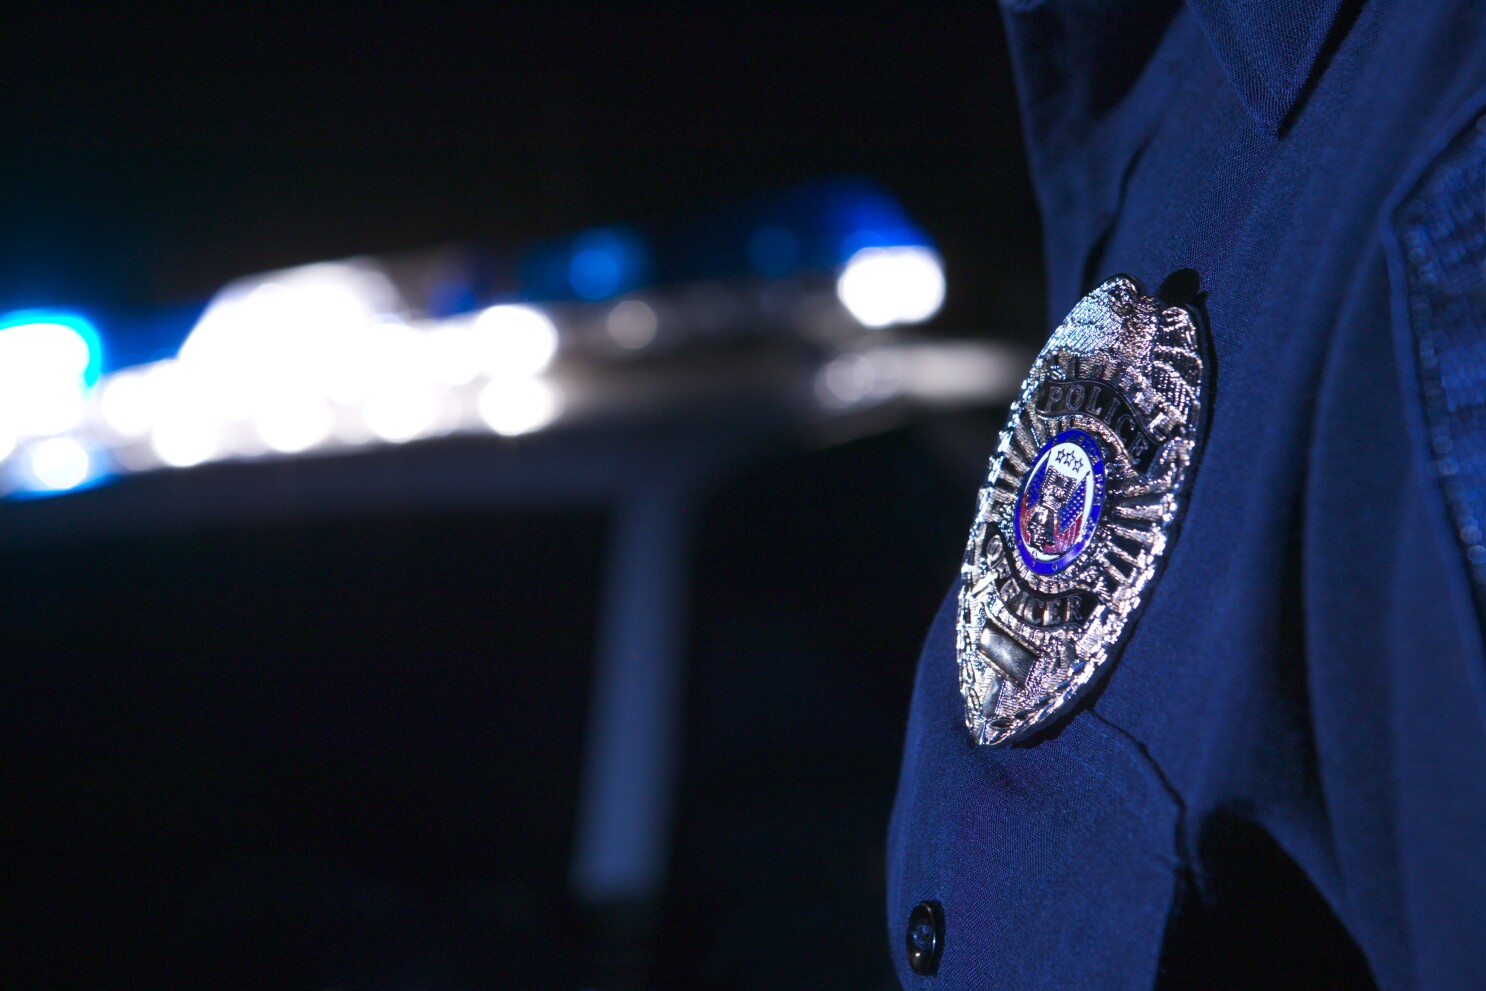 DV Victim Cracking Blue Shield Protecting Police Abuser